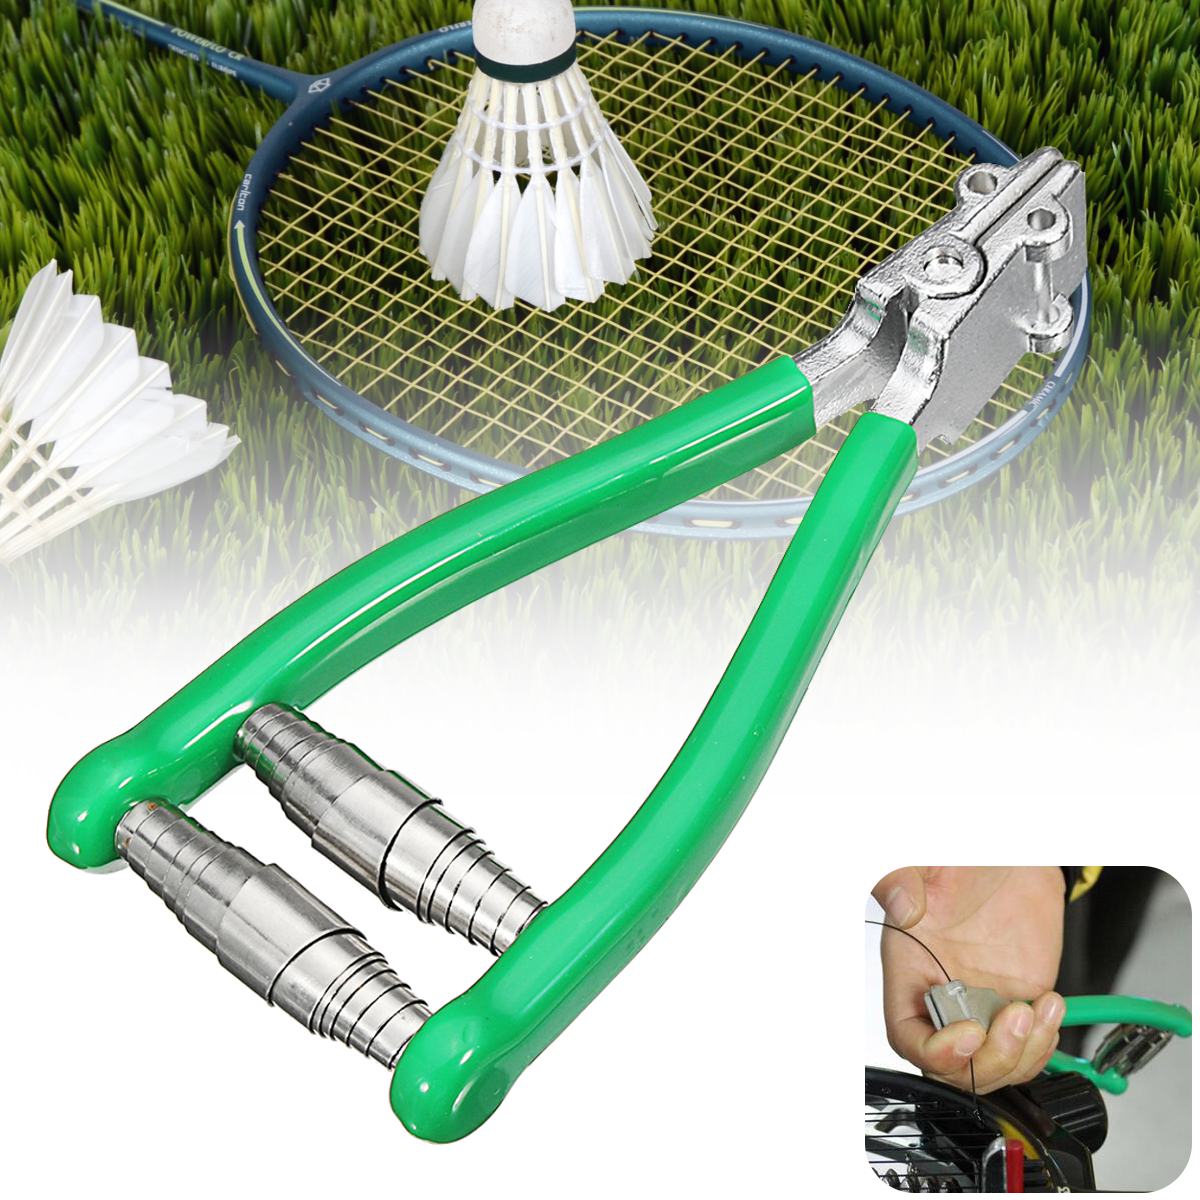 Tennis-Starting-Clamp-Knot-Stringing-Tool-Badminton-Racket-Racquet-1302459